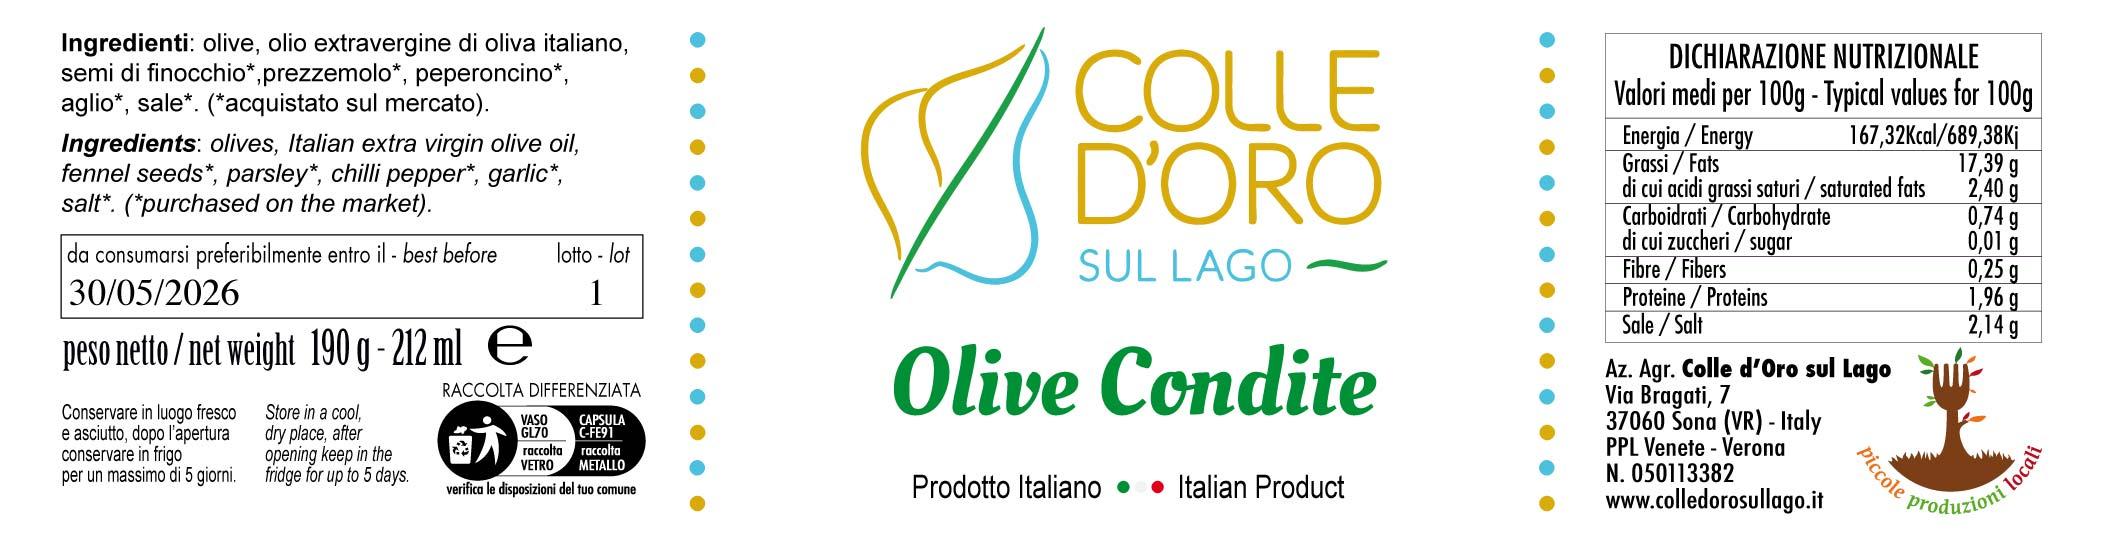 Cod. 13 Olive condite 250 g